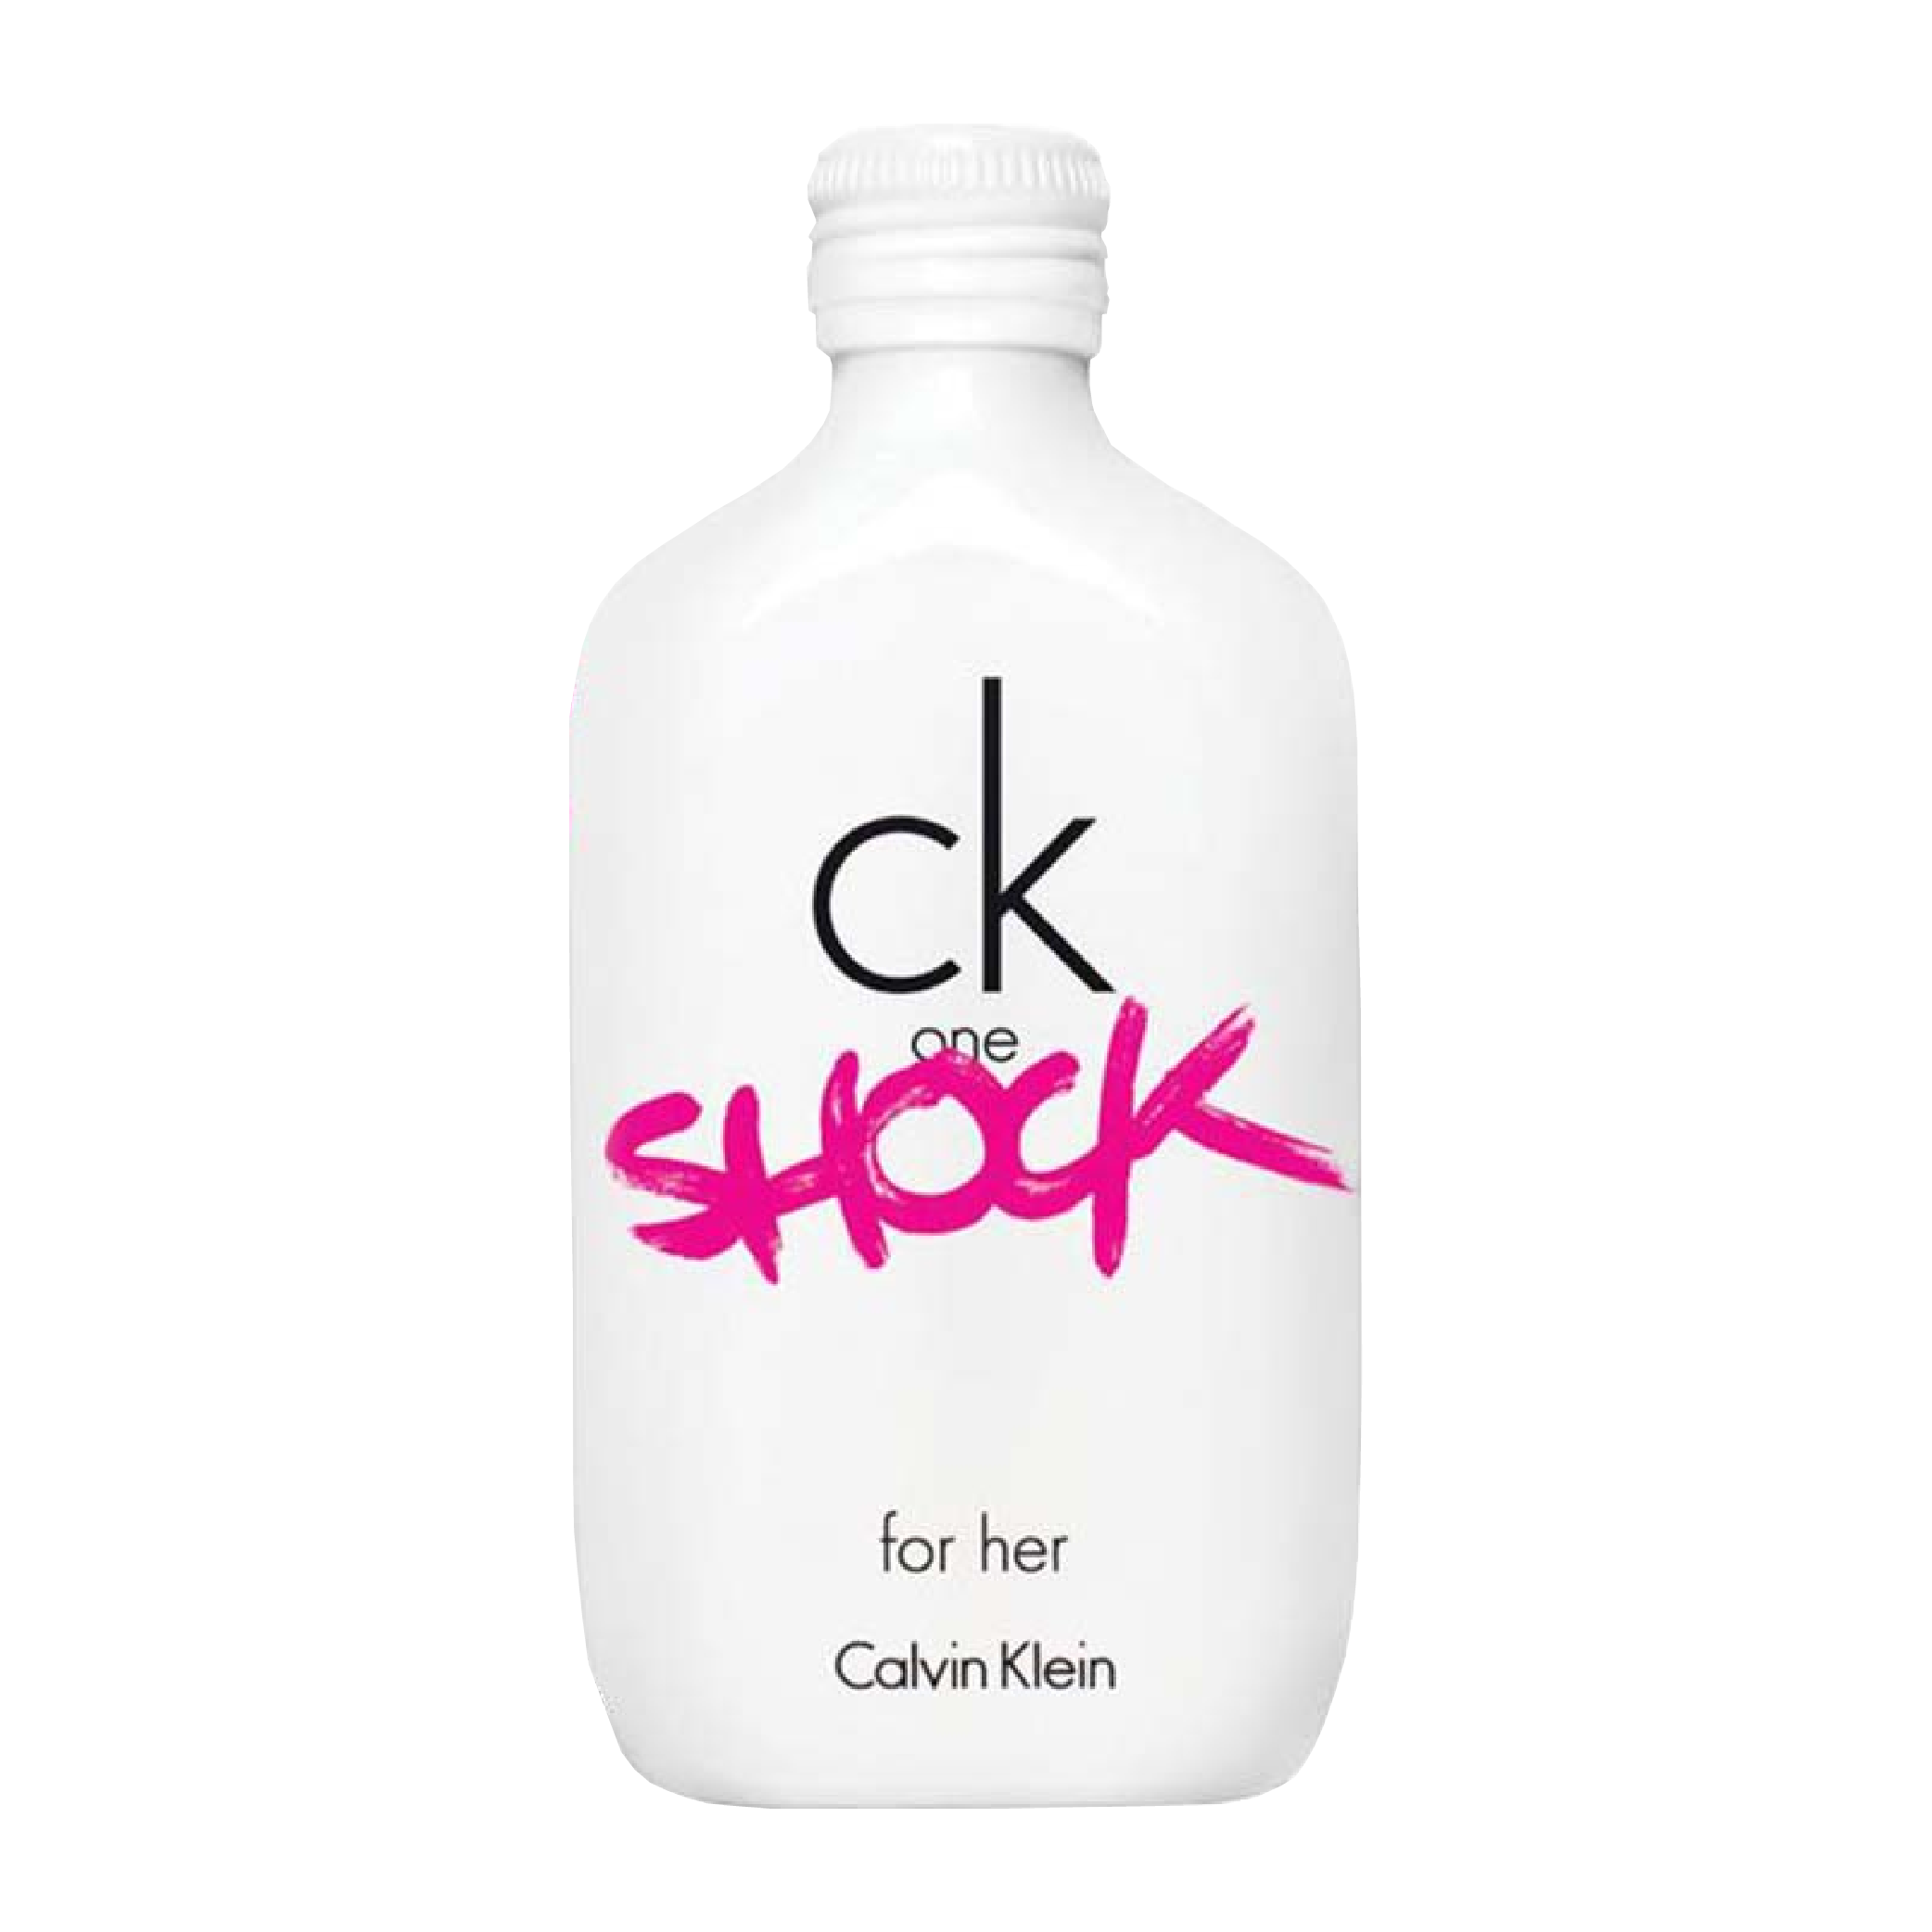 Calvin Klein CK One Shock For Her BLANC